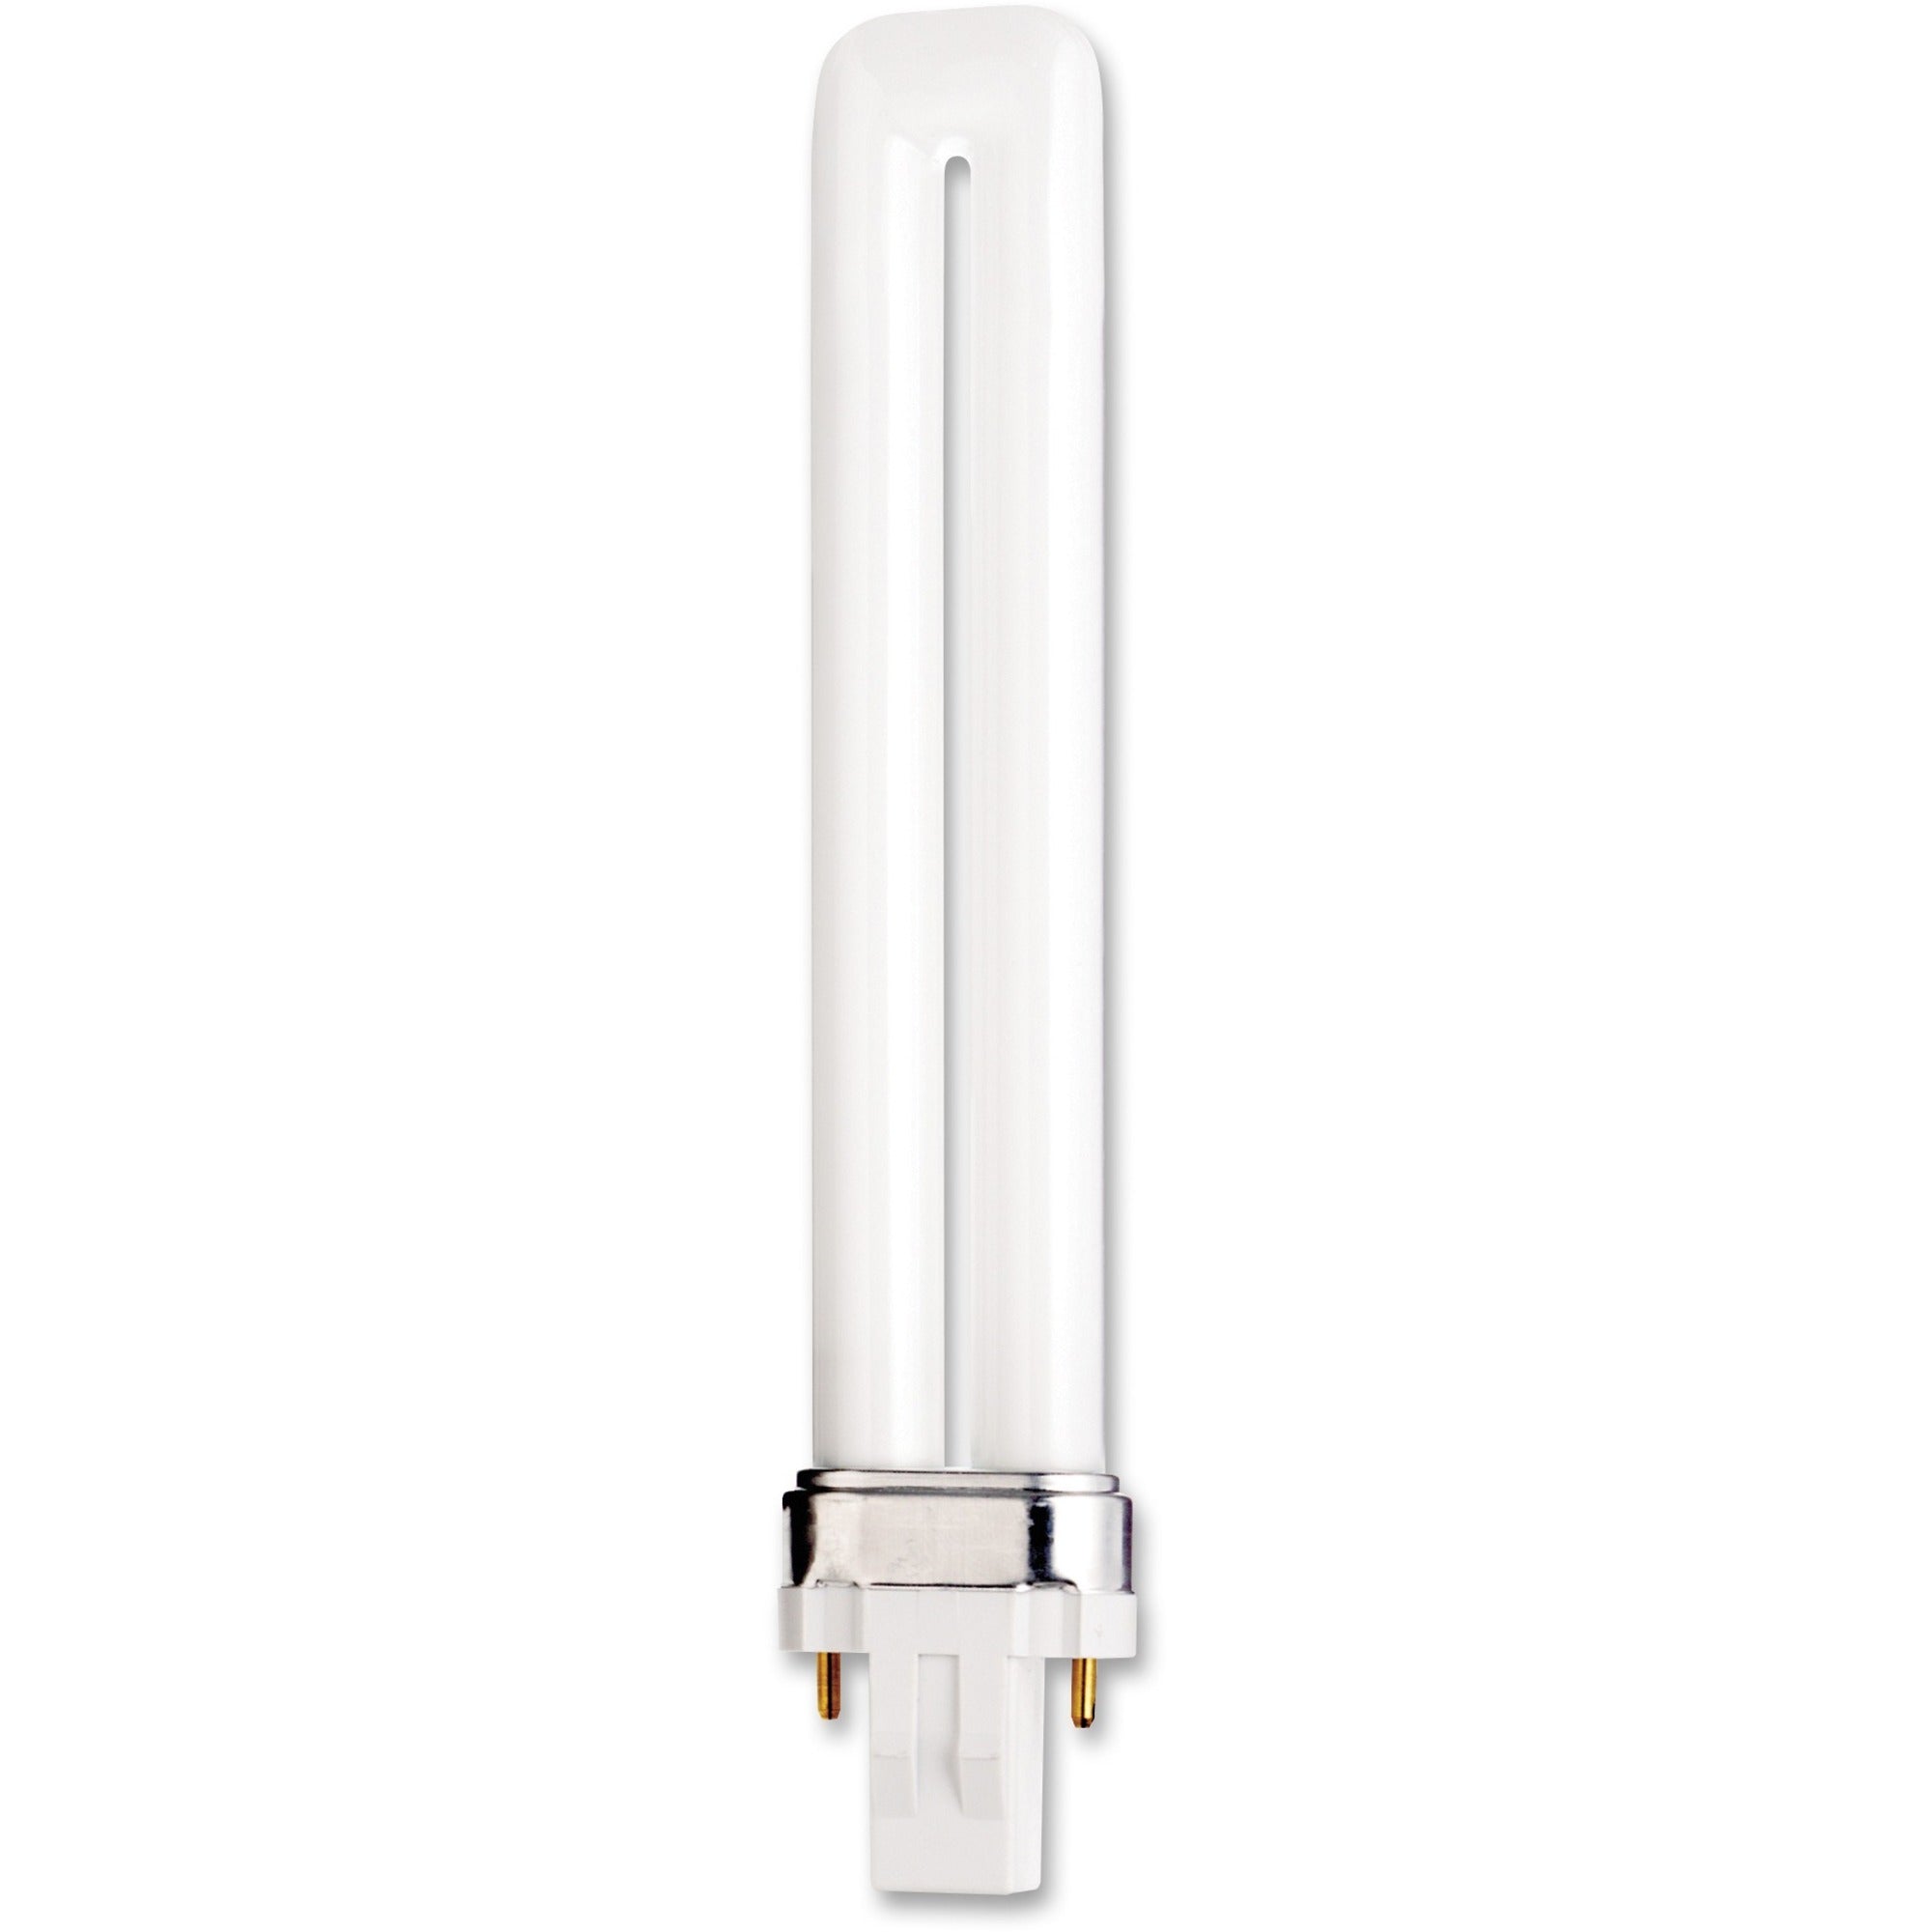 Satco 13-watt Pin-based Compact Fluorescent Bulb - 13 W - 800 lm - T4 Size - Warm White Light Color - GX23 Base - 12000 Hour - 4400.3degF (2426.8degC) Color Temperature - 82 CRI - Energy Saver - 1 Each - 